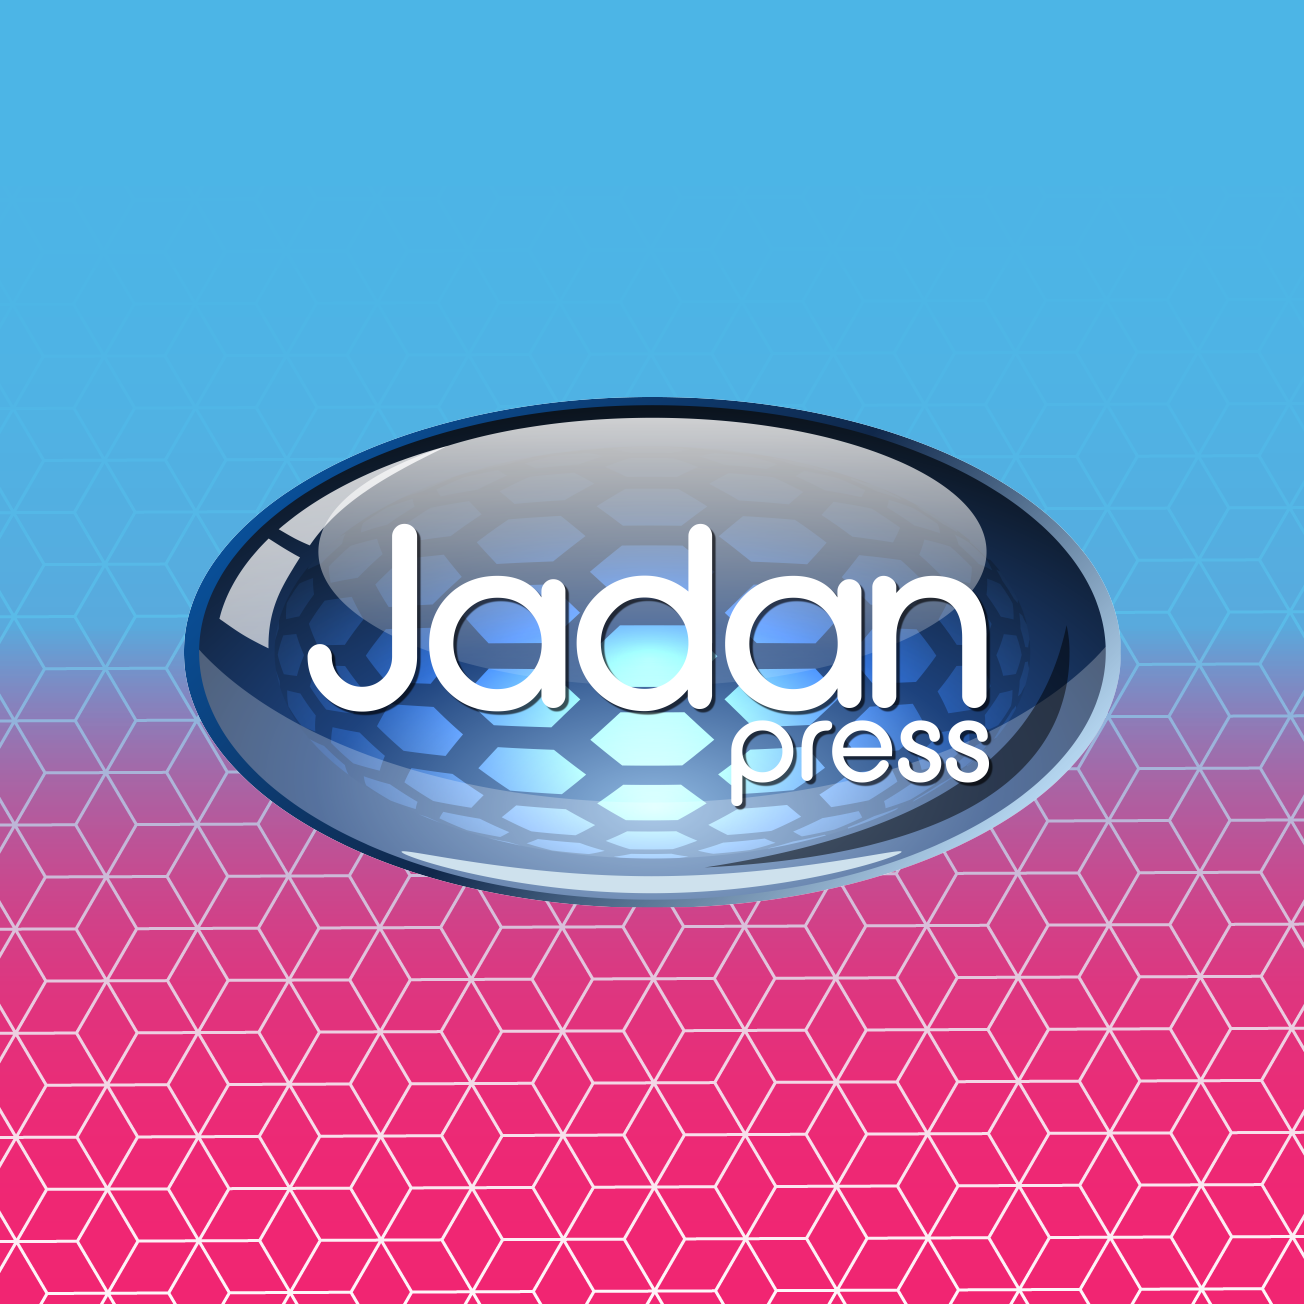 Club Image for JADAN PRESS